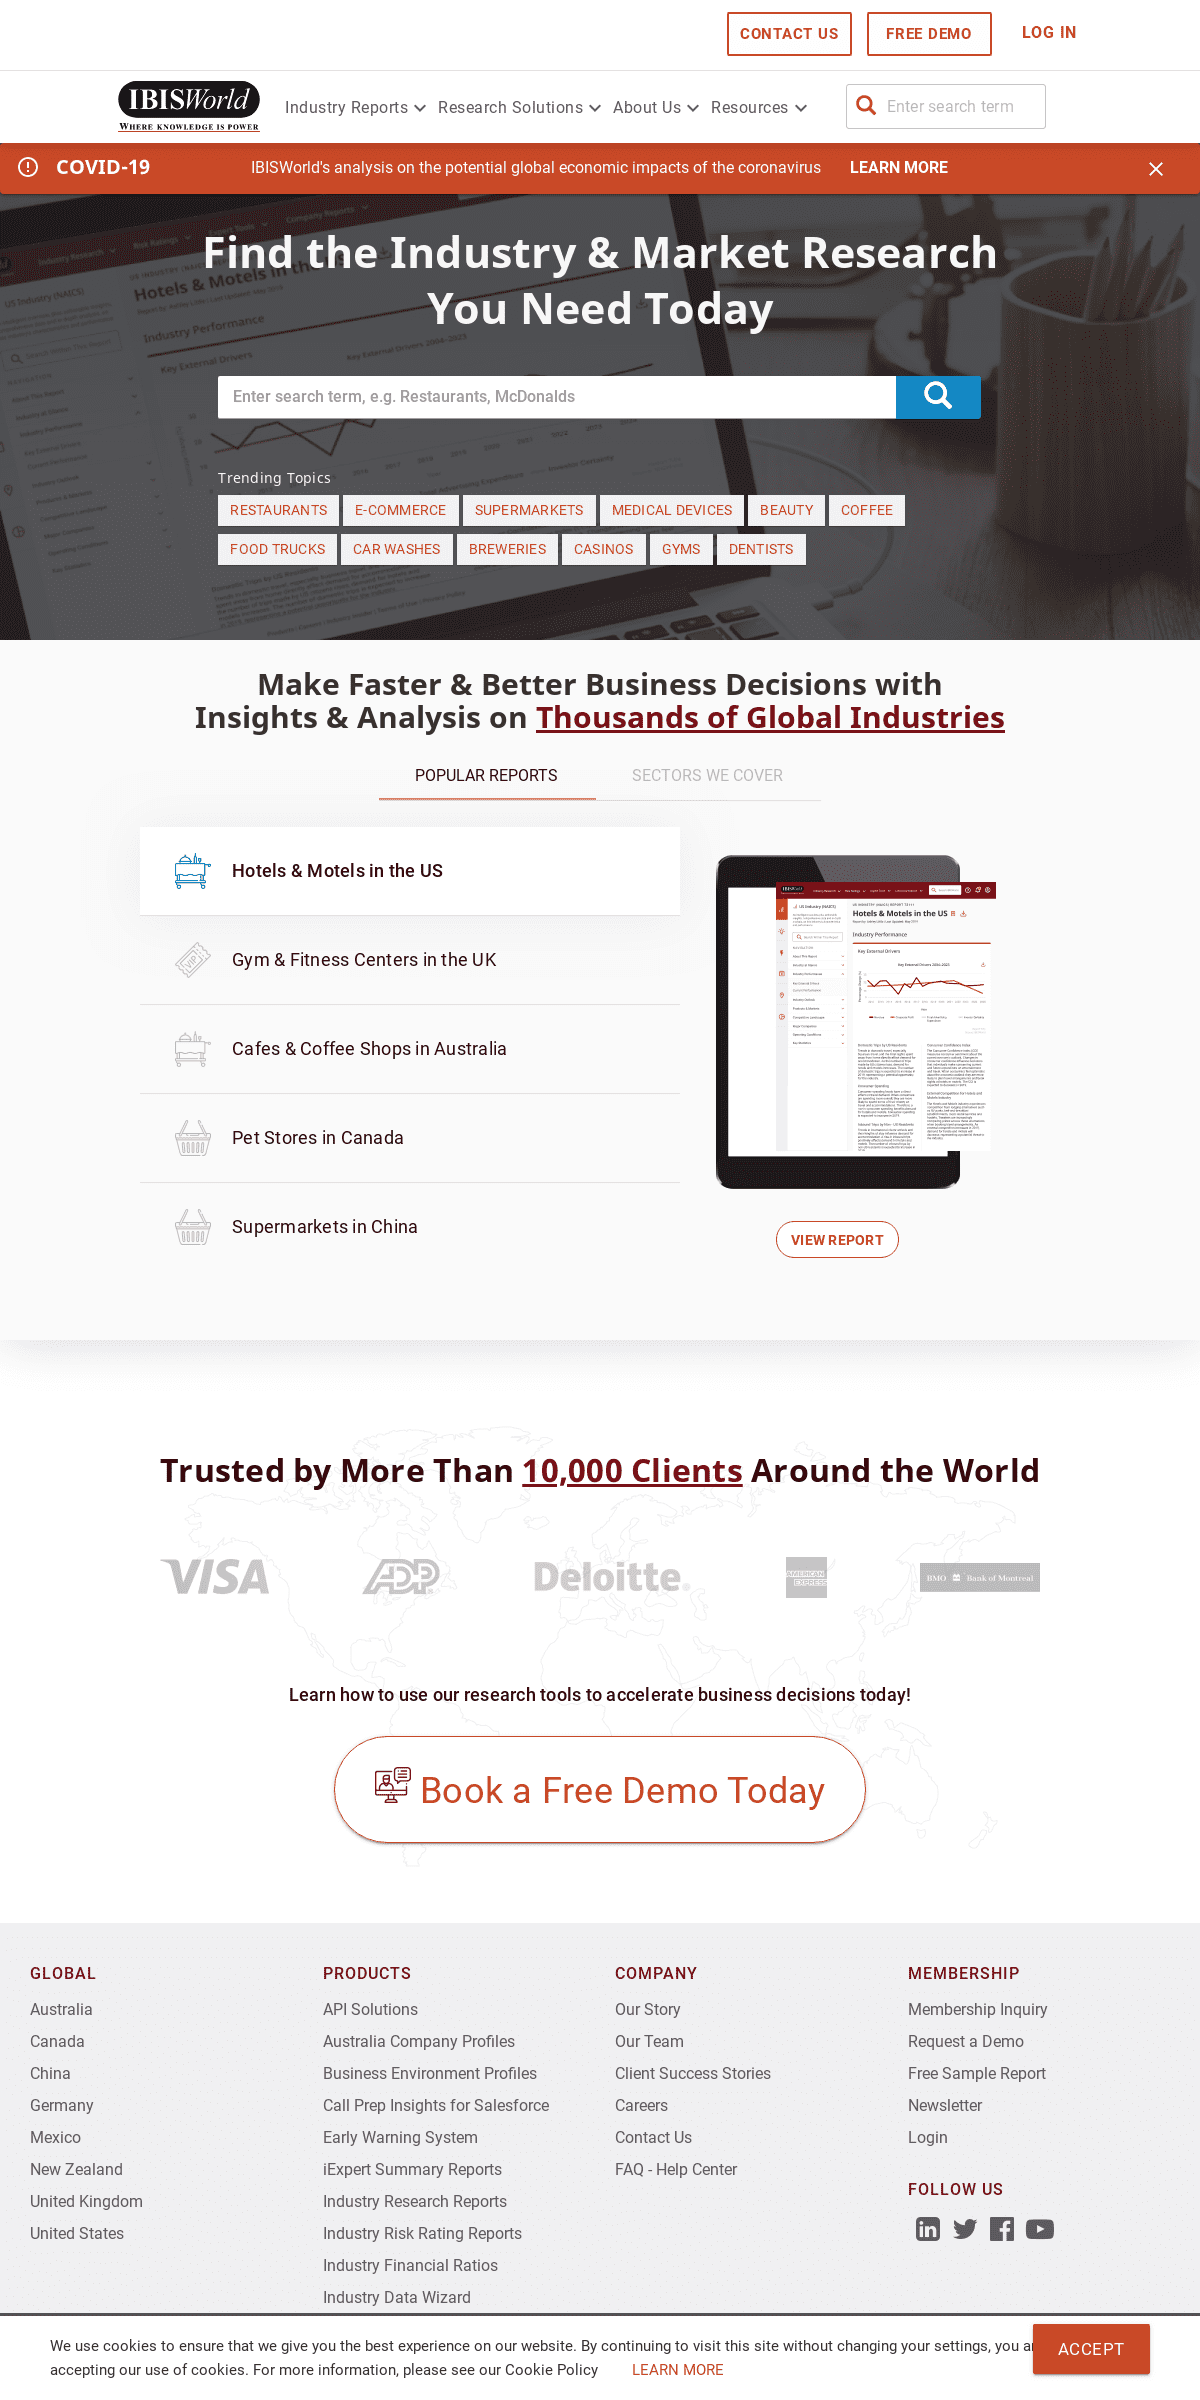 A complete backup of ibisworld.com.au